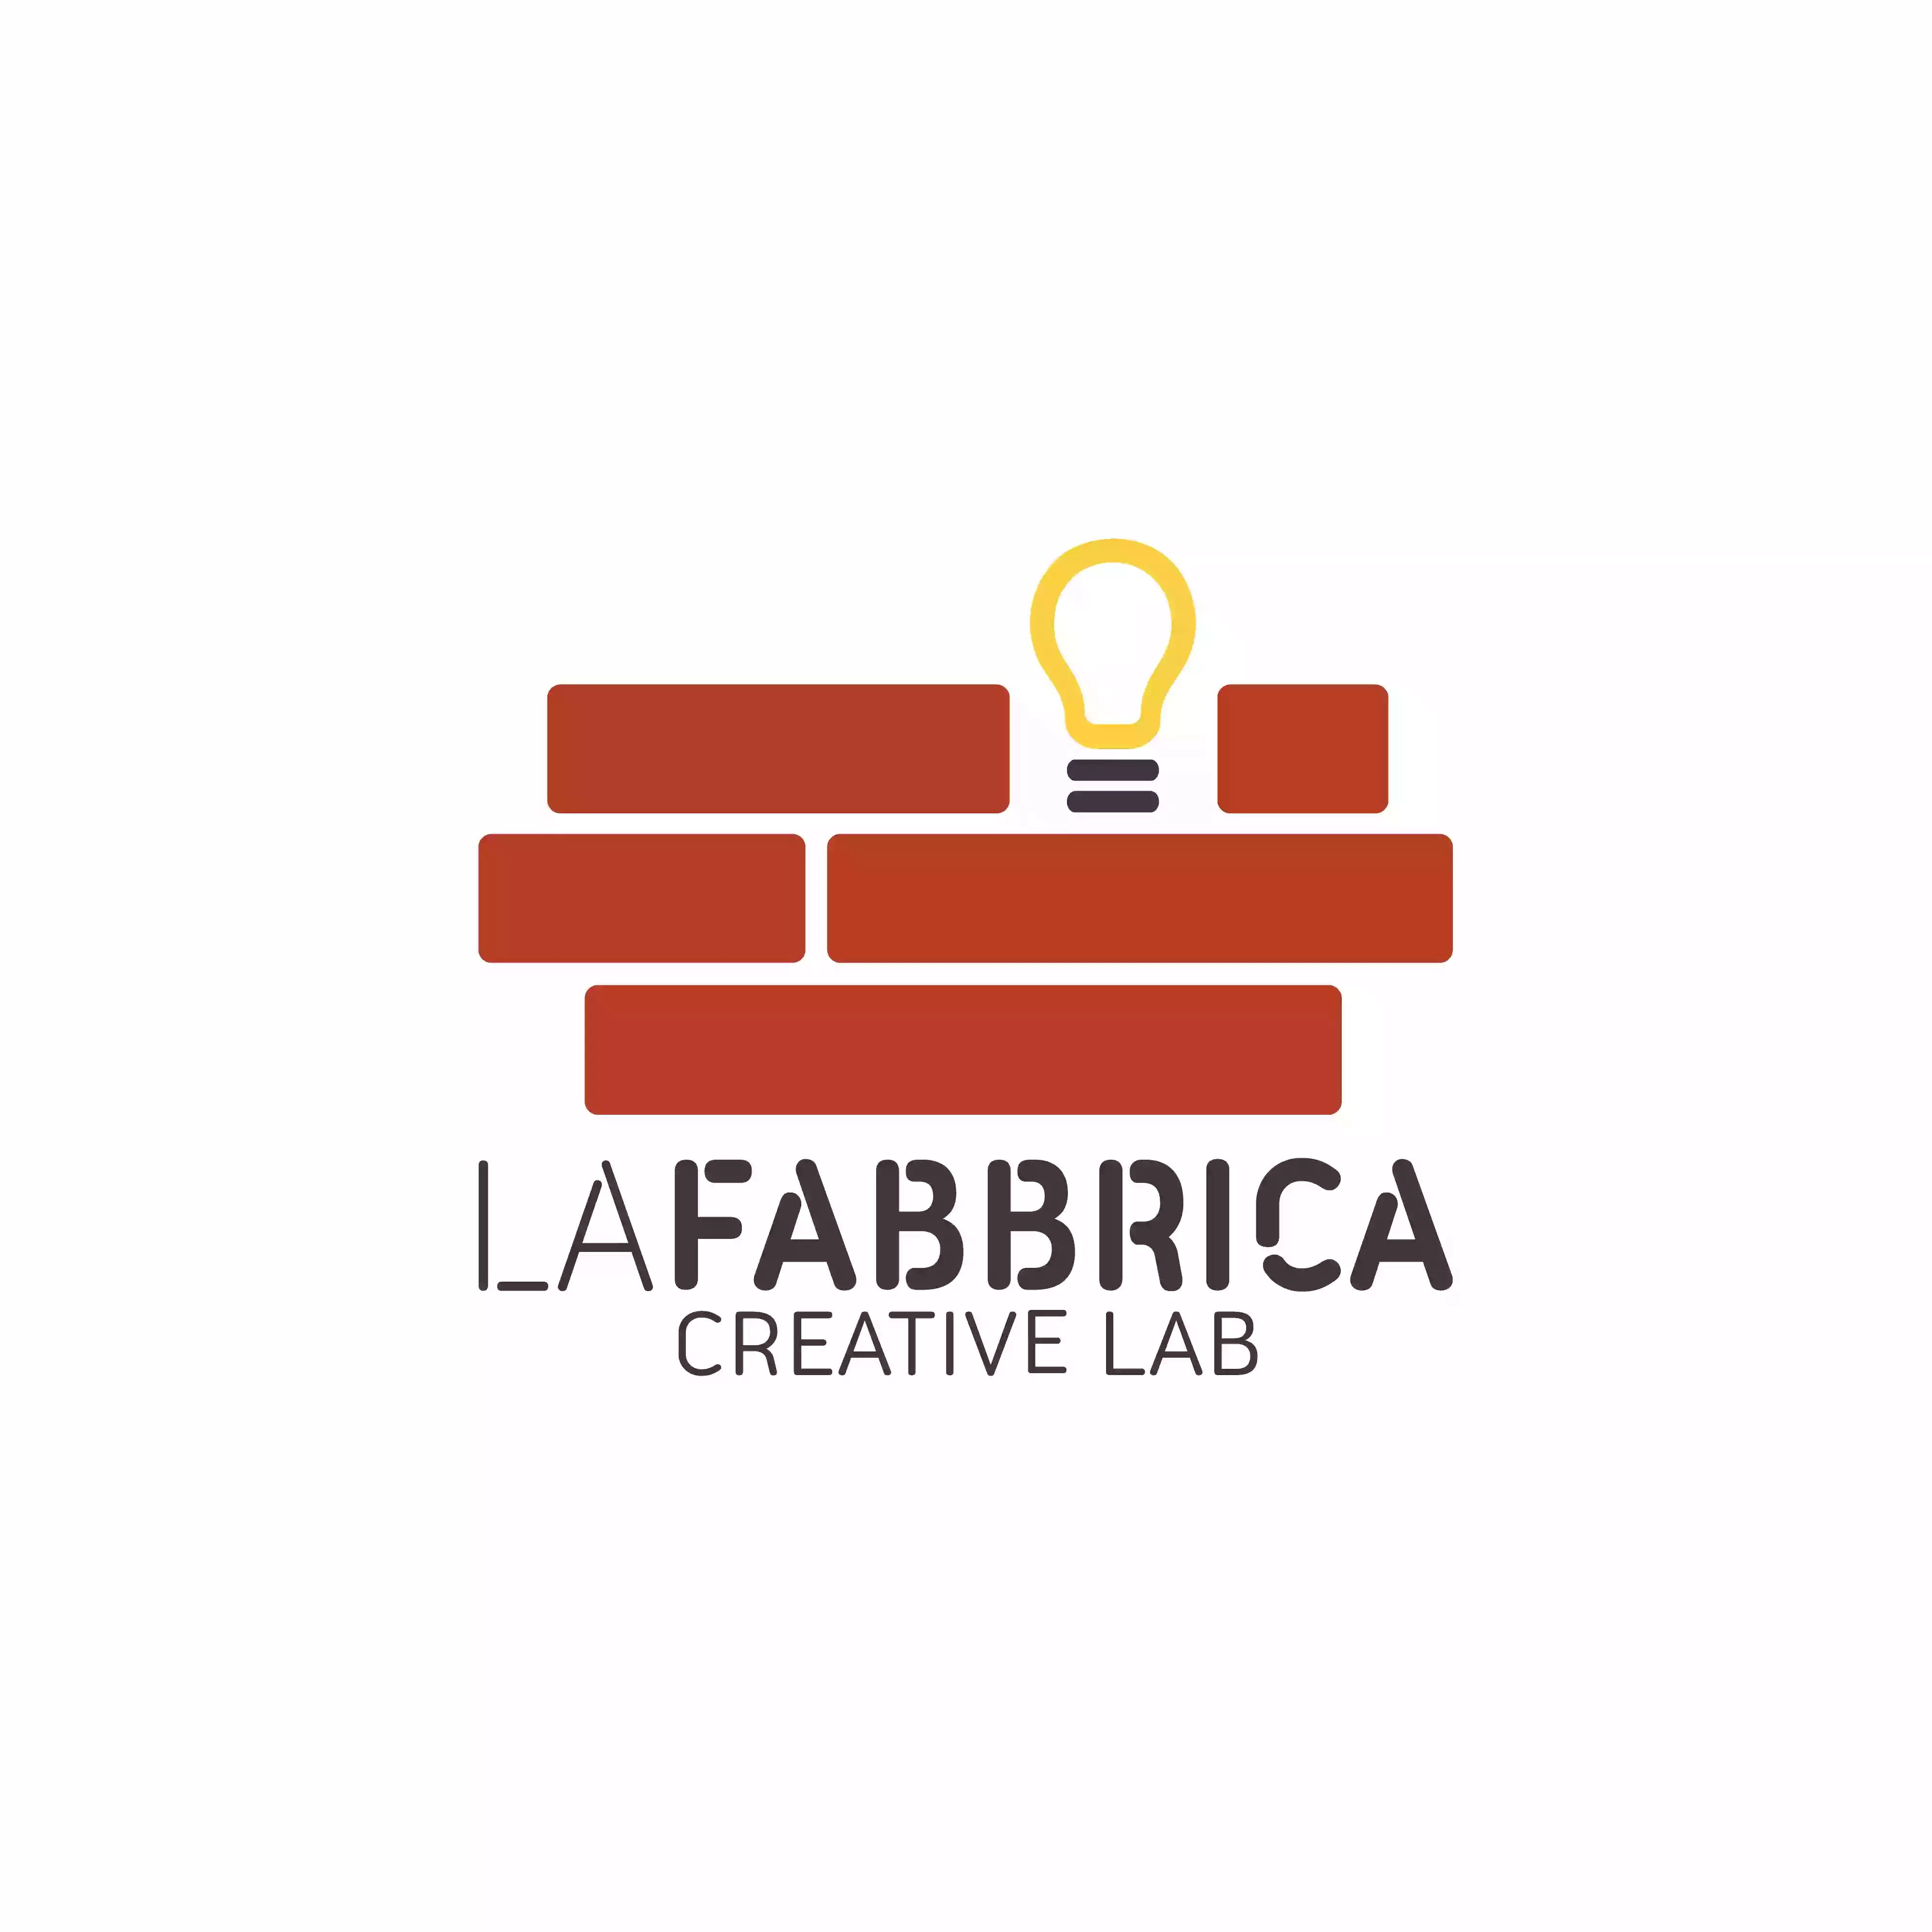 La Fabbrica - Creative Lab